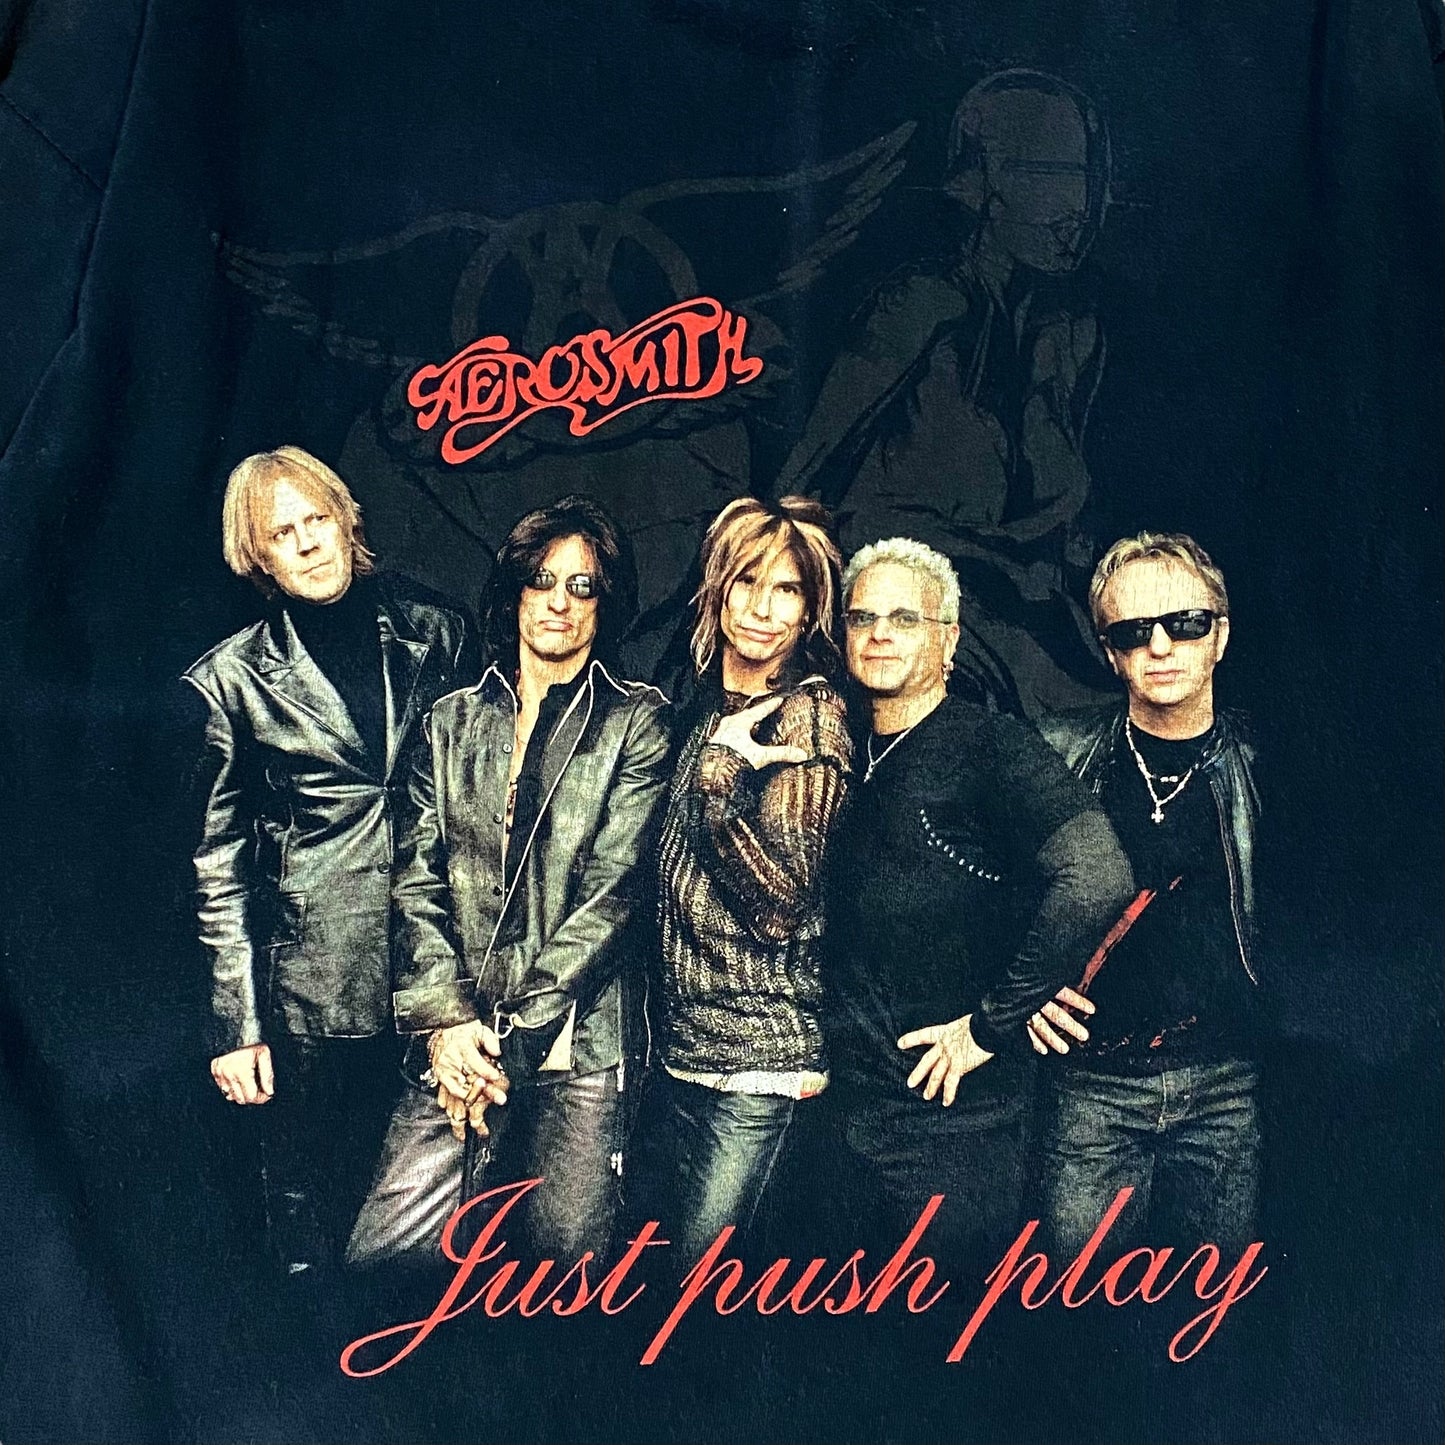 00's "Aerosmith" Just push play" Album tour t-shirt